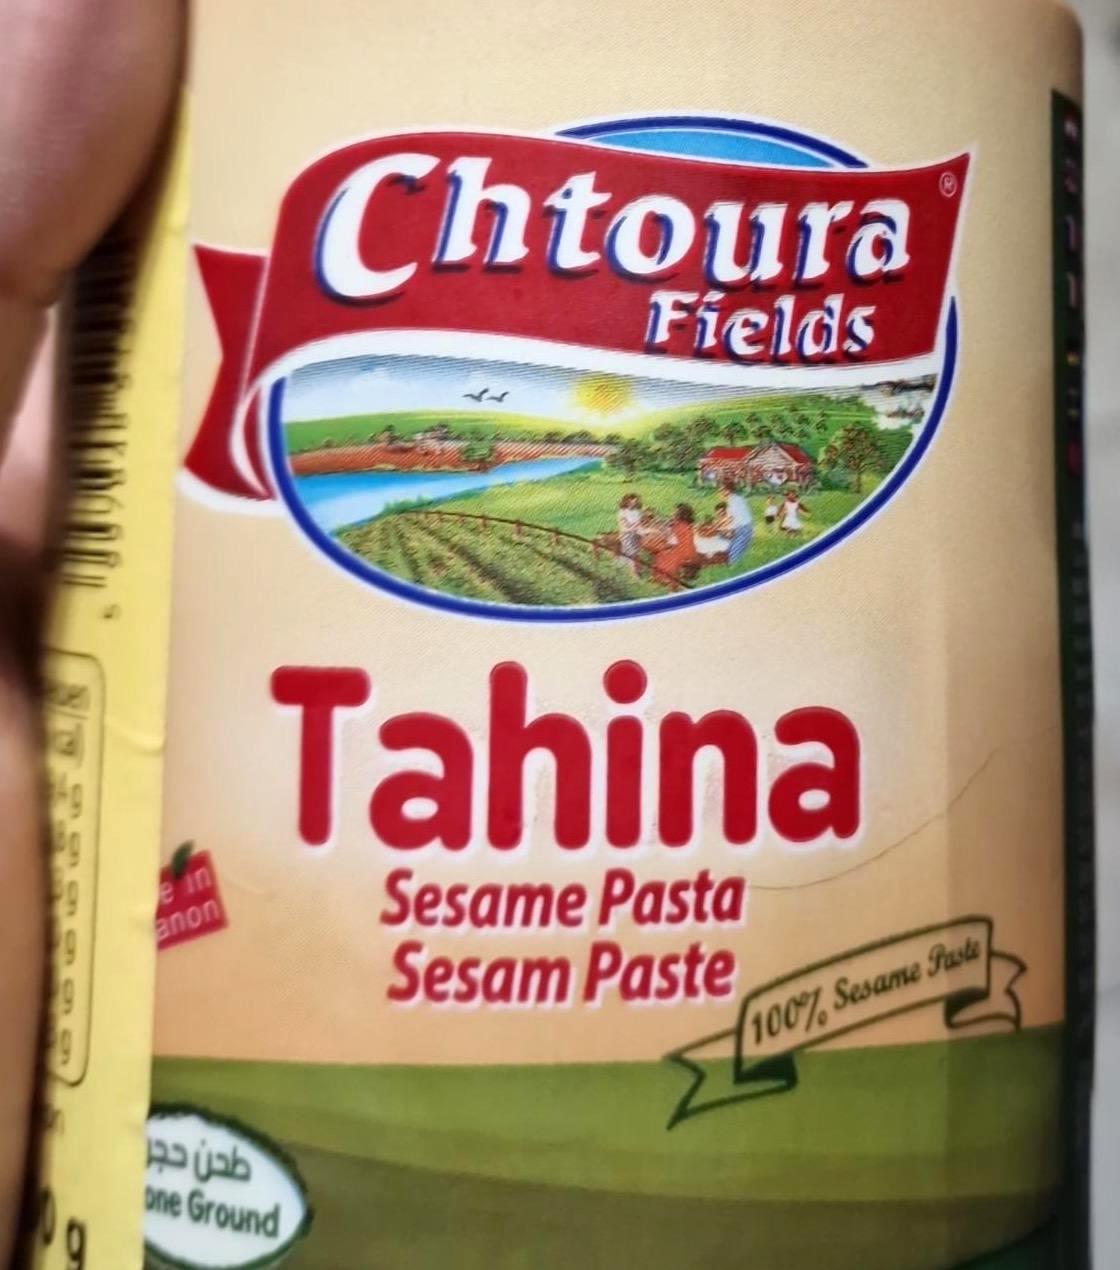 Képek - Tahina sesame pasta Chtoura Fields